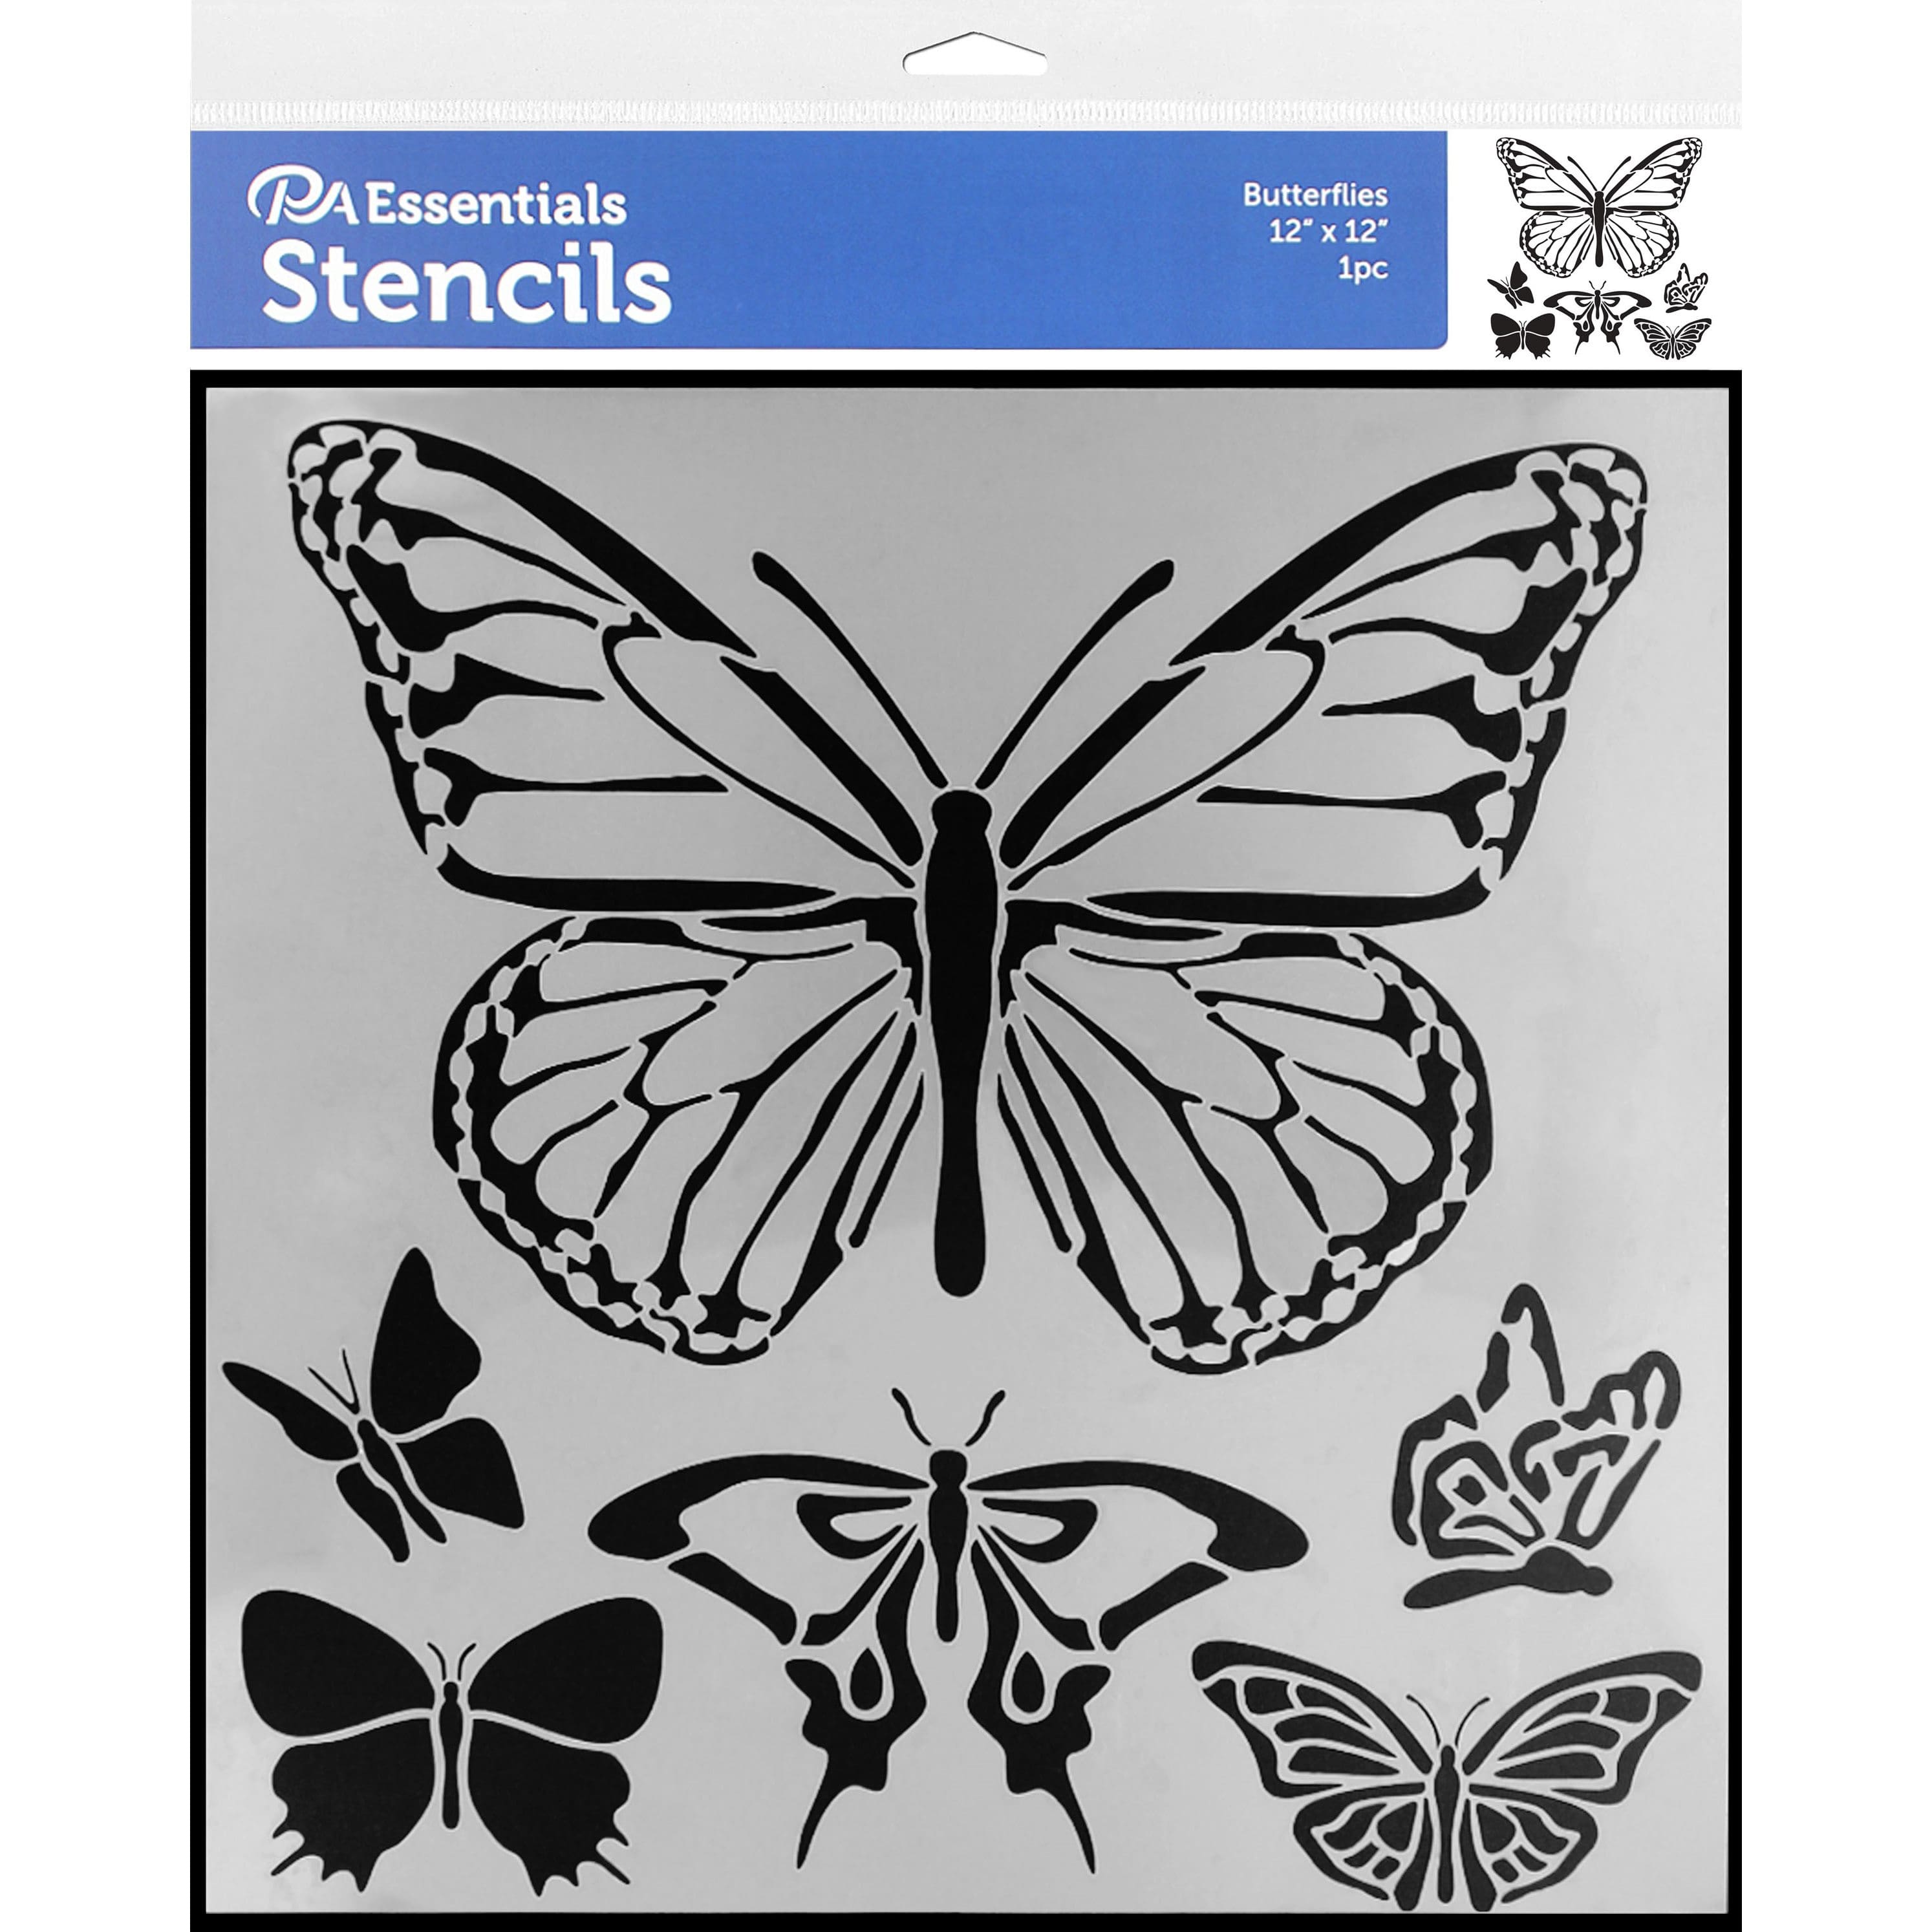 PA Essentials Butterflies Stencil, 12 x 12